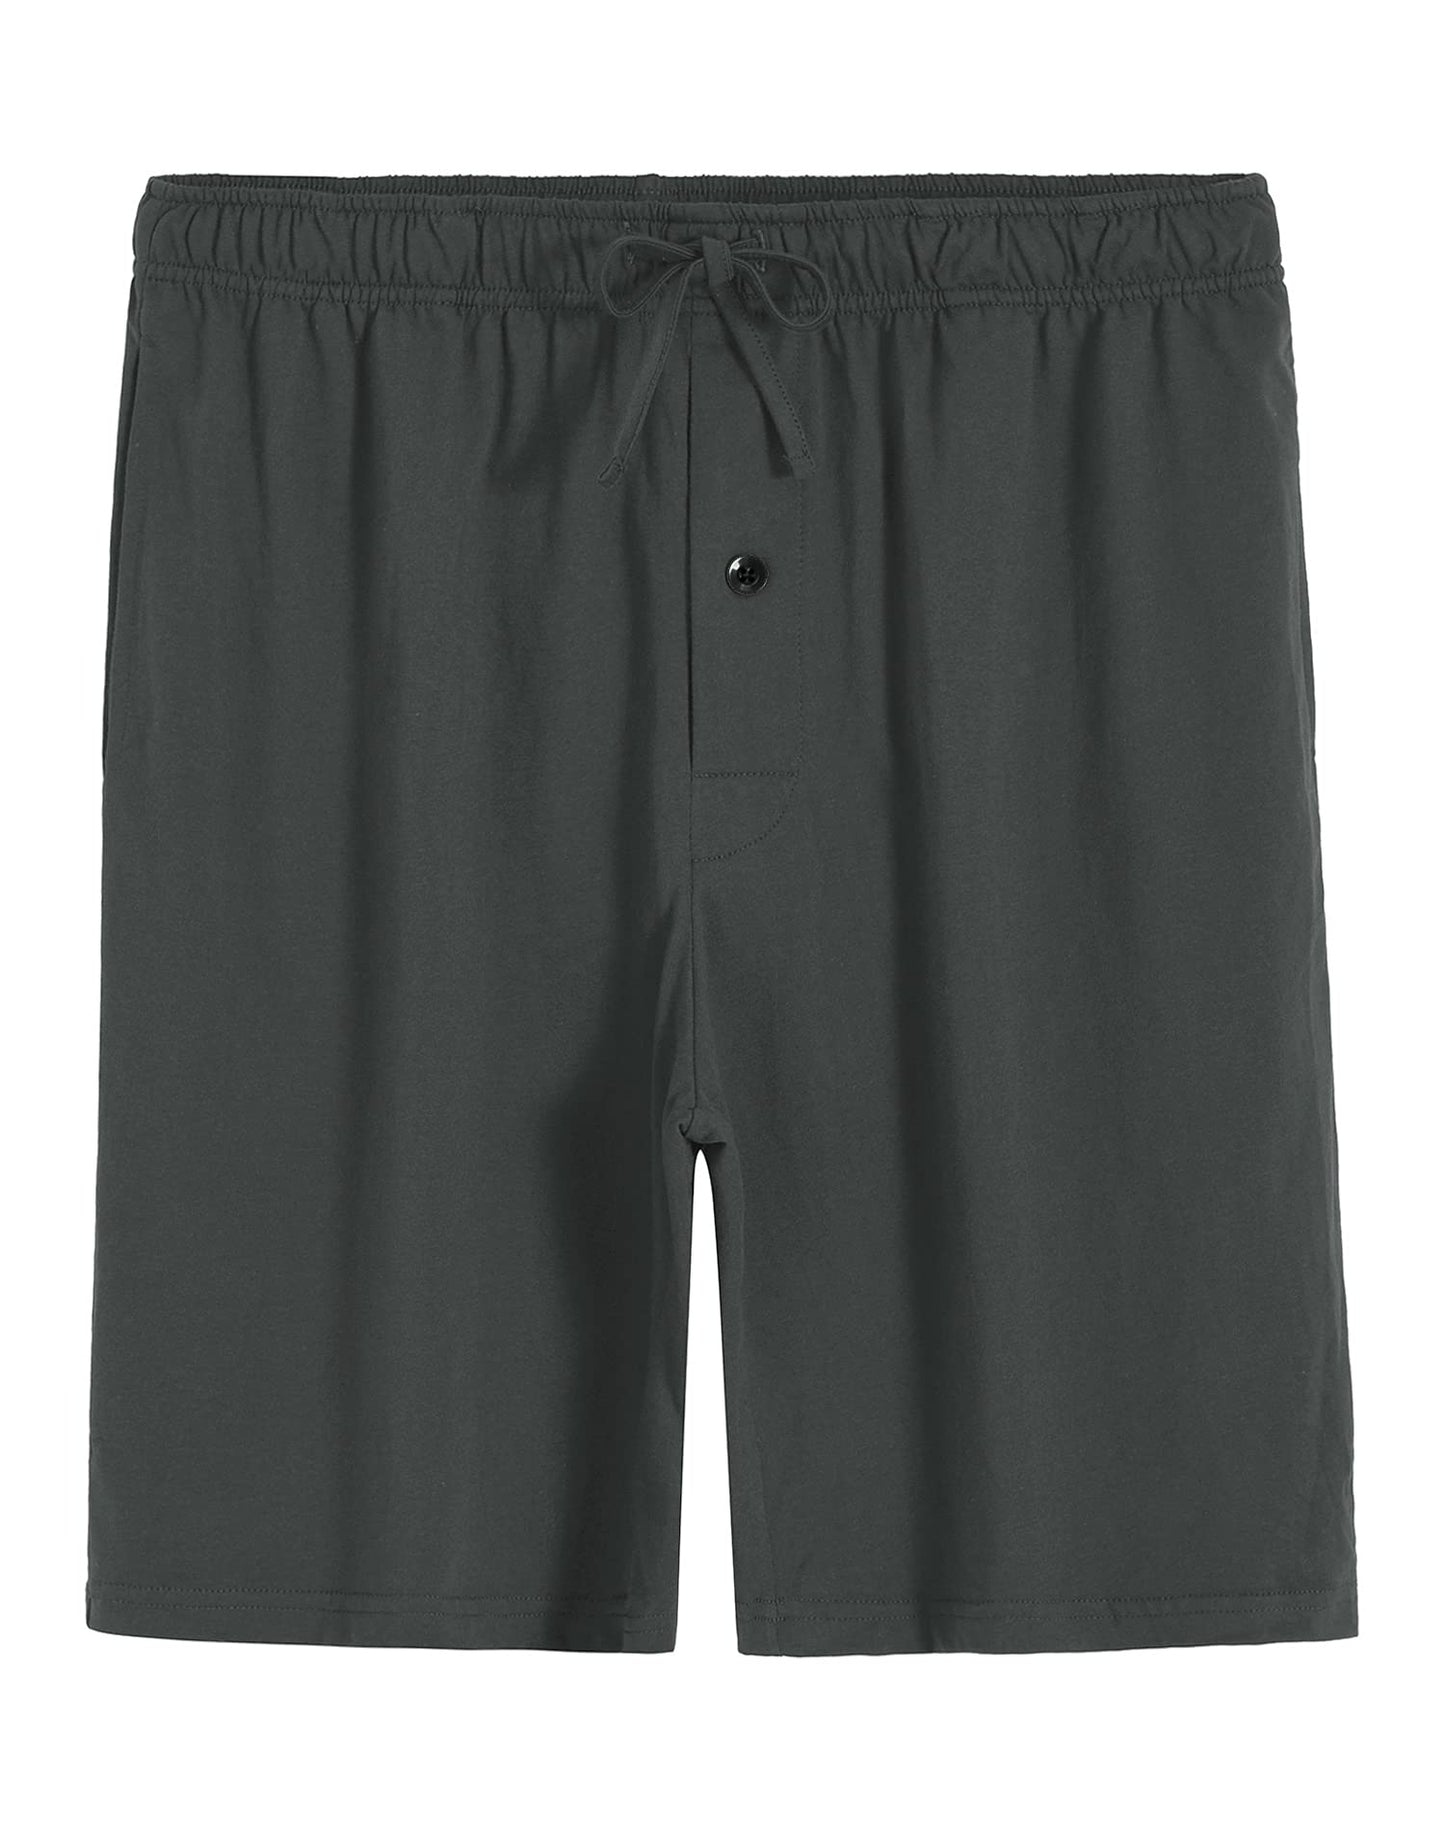 Men's Cotton Pajama Bottoms Soft Lounge Shorts with Pockets - Latuza